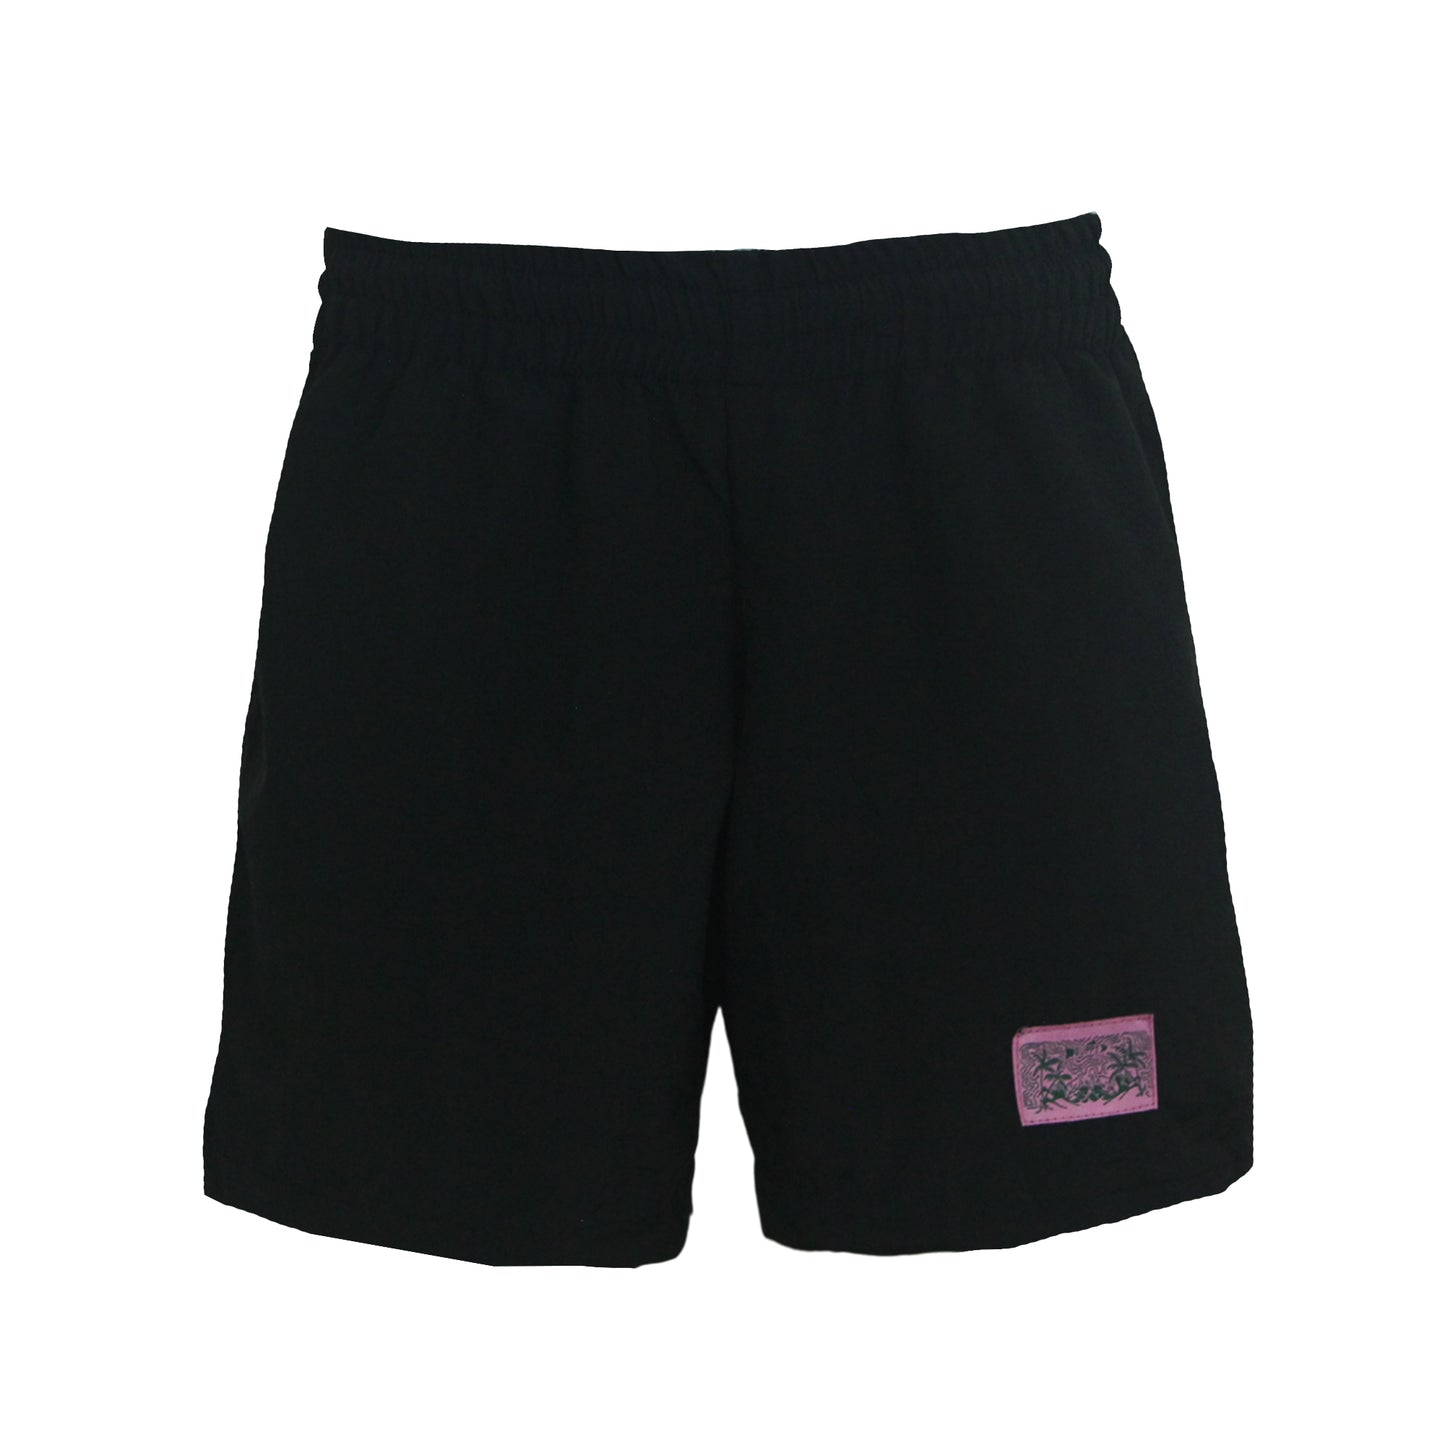 Tropic Daze Camper Shorts (Black)